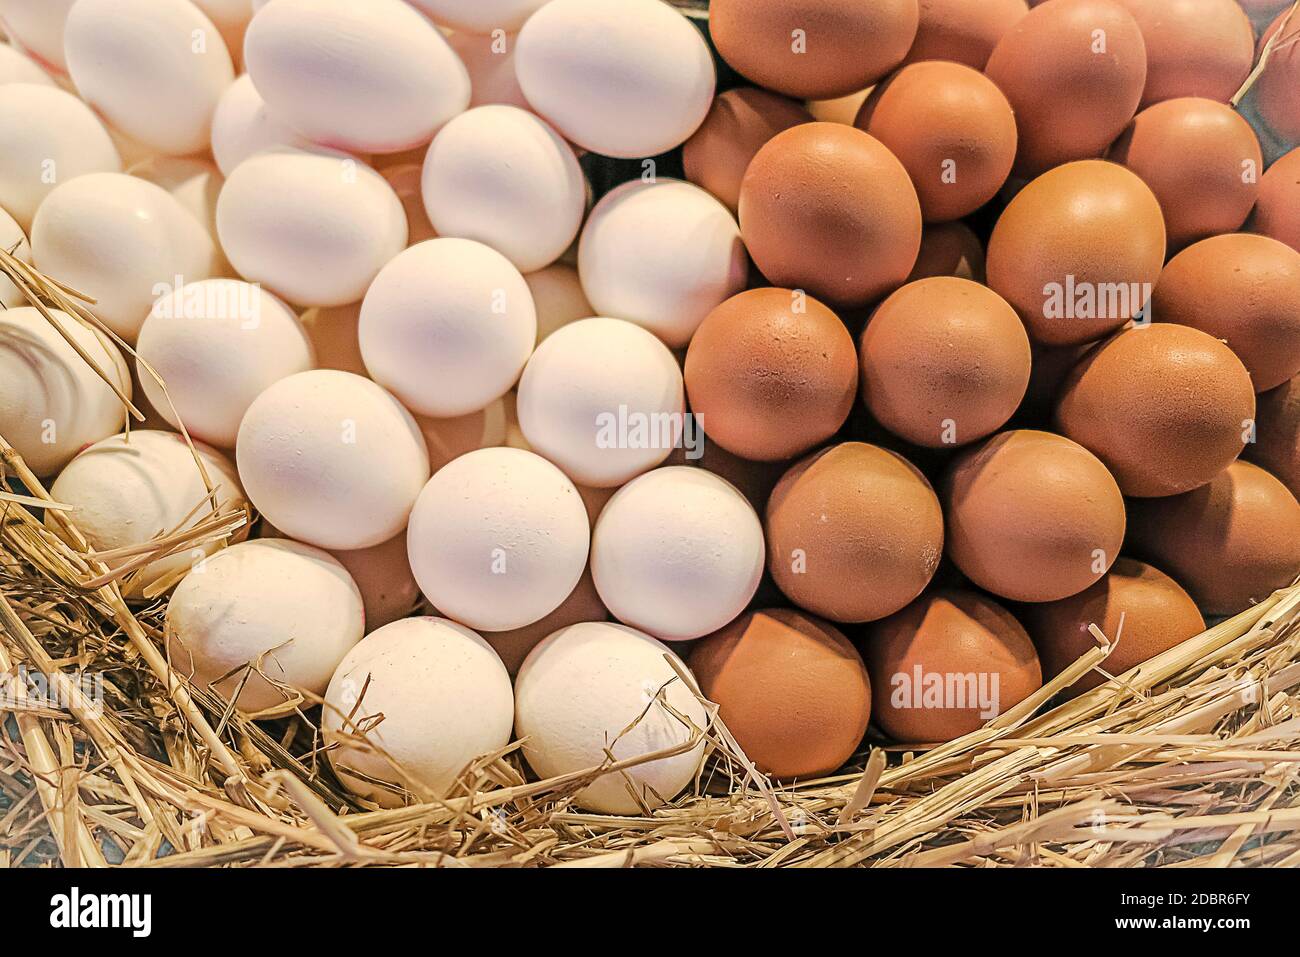 Wonderful arrangement of fresh white and brown chicken eggs in basket Stock Photo